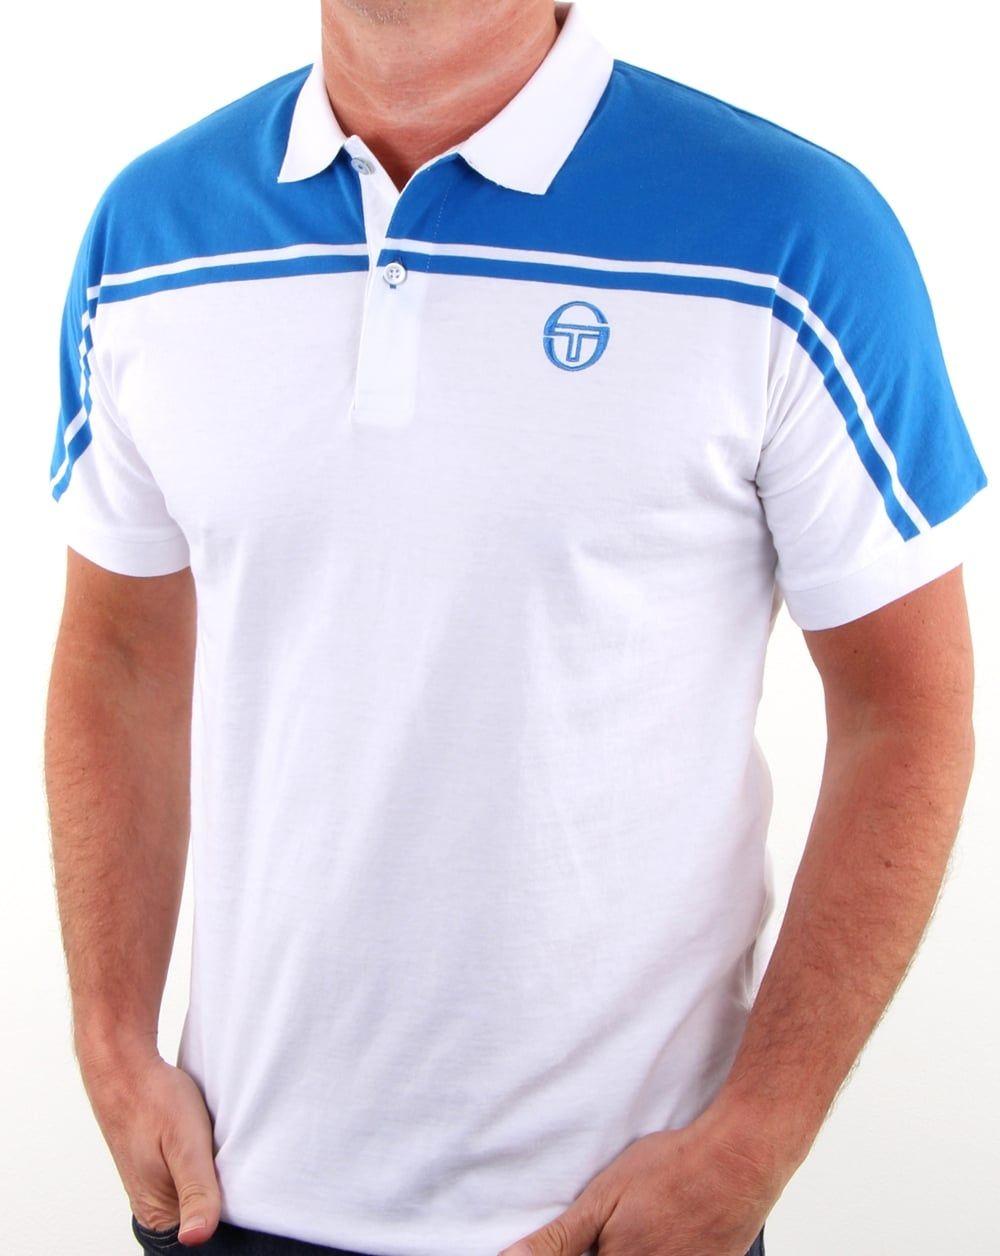 White and Blue Polo Logo - Sergio Tacchini New Young Line Polo Shirt White Royal, Men's